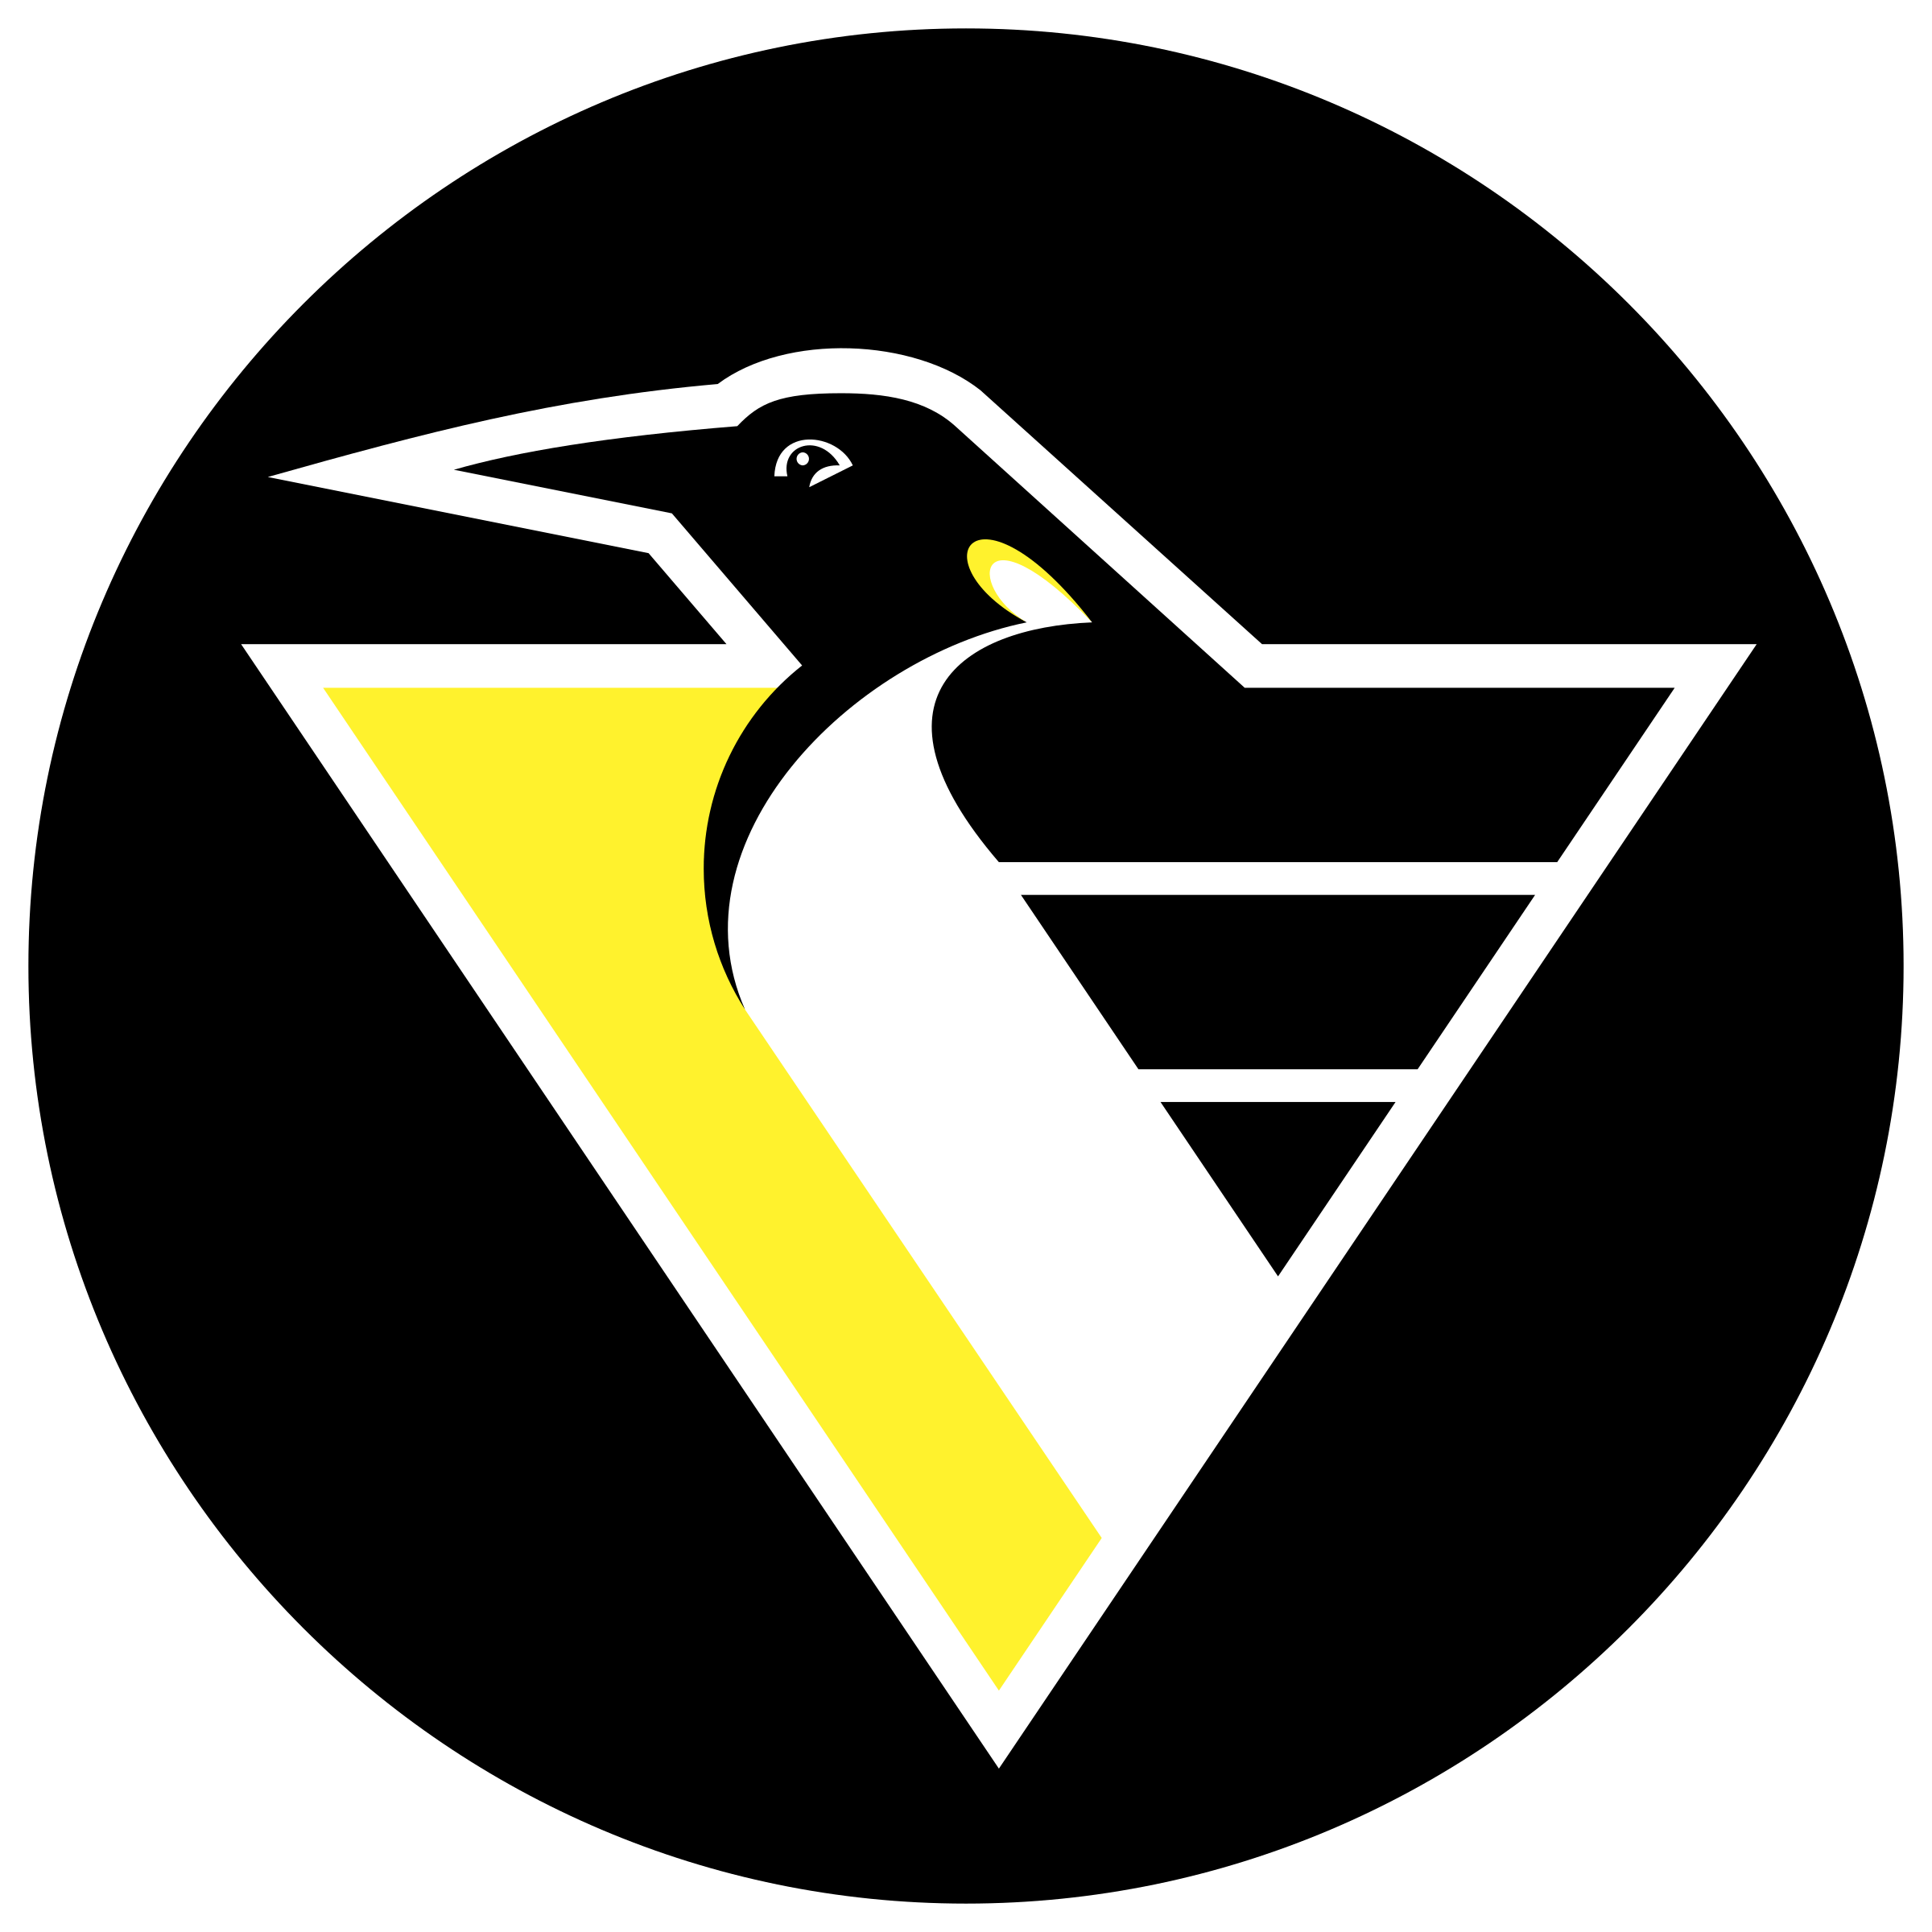 Pengiuns Logo - Pittsburgh Penguins Logo PNG Transparent & SVG Vector - Freebie Supply